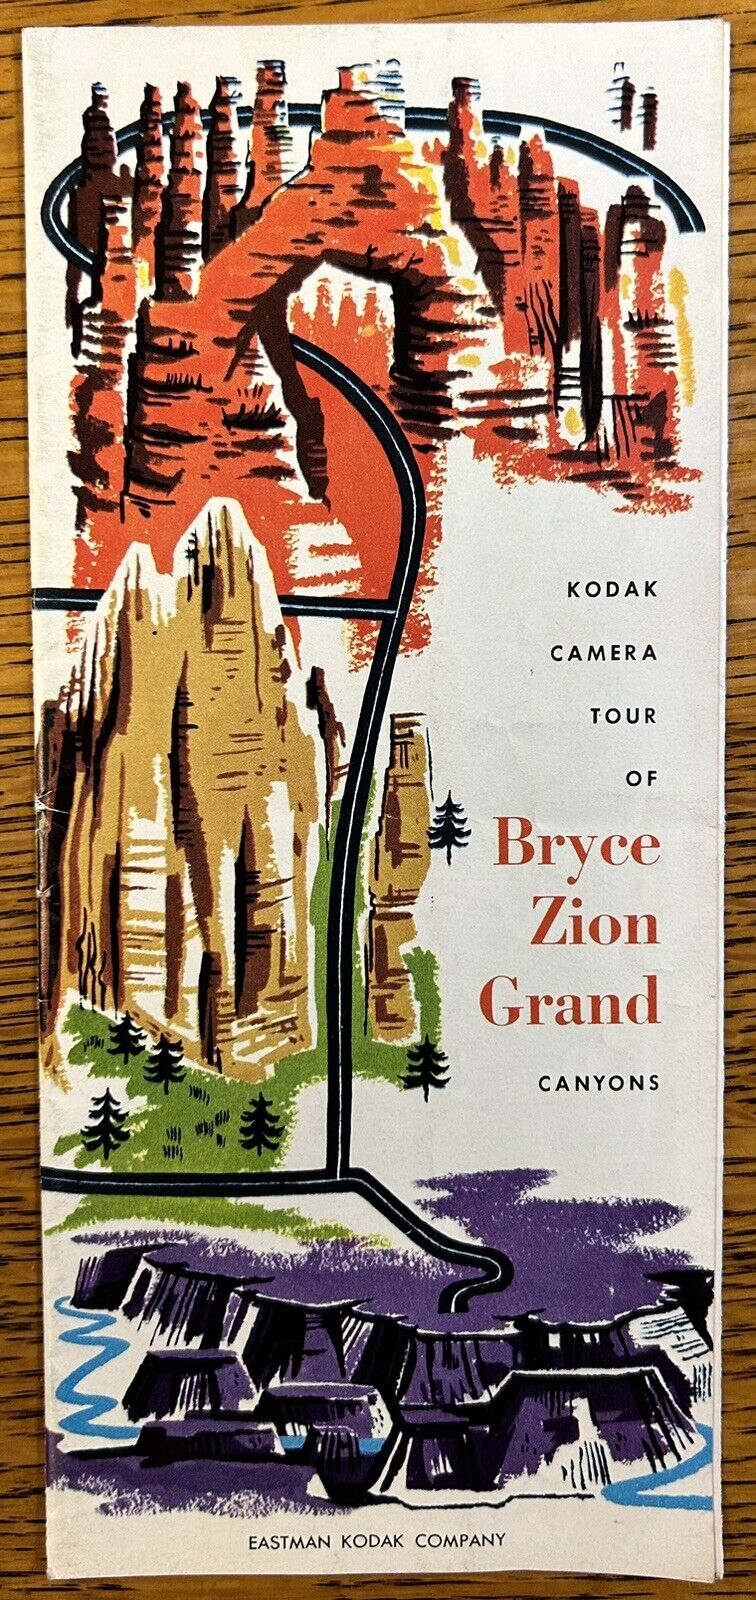 Kodak Camera Tour of Bryce, Zion, Grand Canyons, Vintage Eastman Kodak Co. 1953